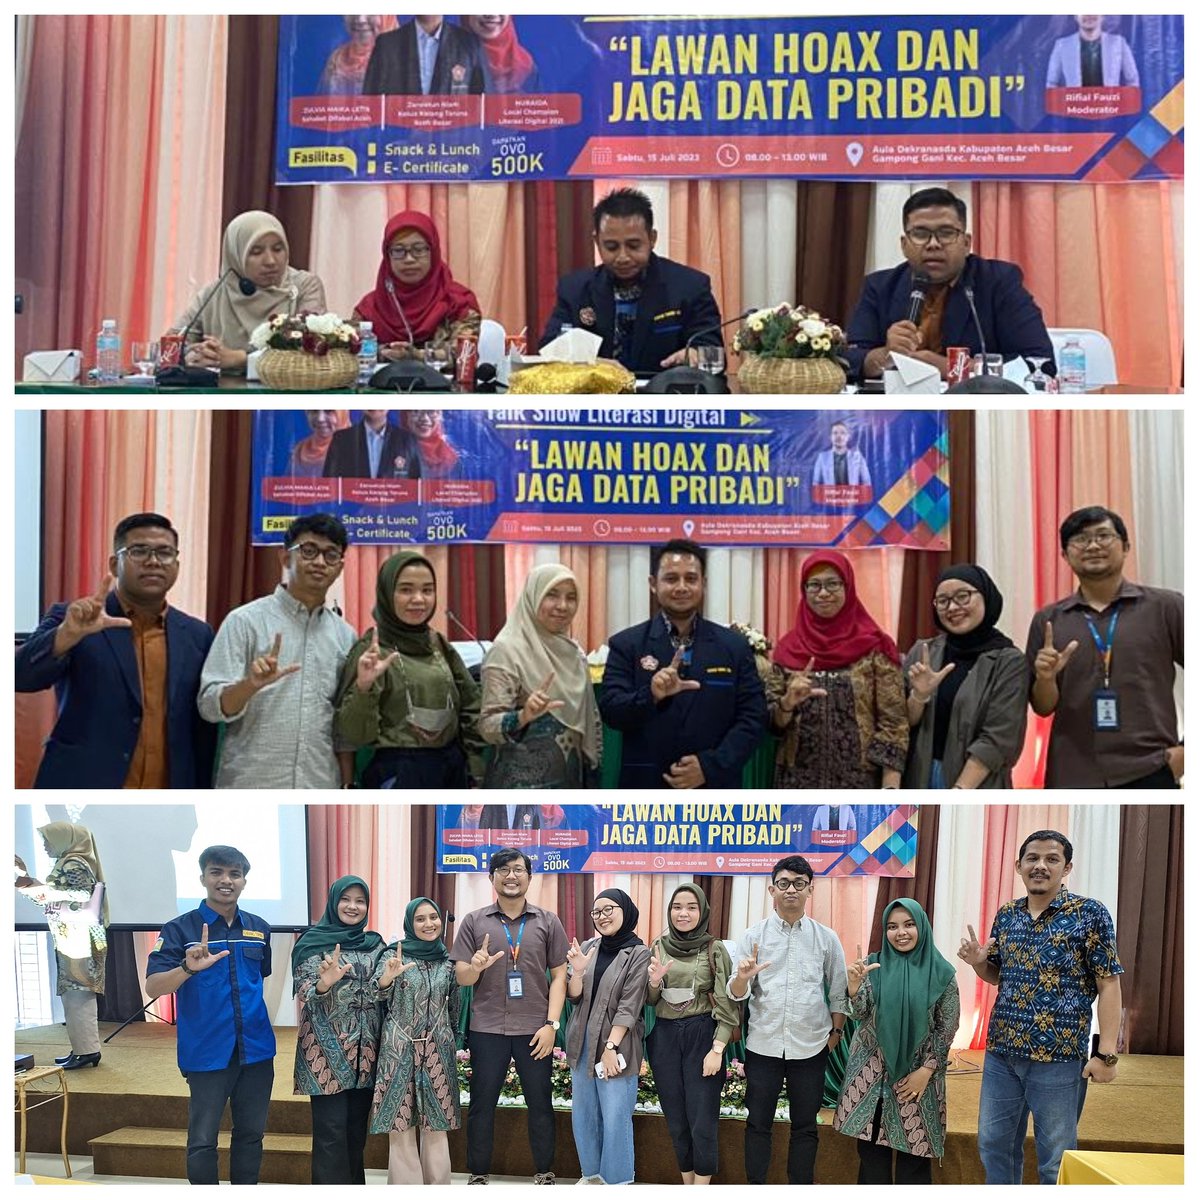 Kegiatan Literasi Digital 'Lawan Hoax dan Jaga Data Pribadi' bersama Komunitas Karang Taruna Kab. Aceh Besar dilaksanakan di Aula Dekranasda Aceh Besar pada Sabtu, 15 Juli 2023.
@karangtaruna
#makincakapdigital